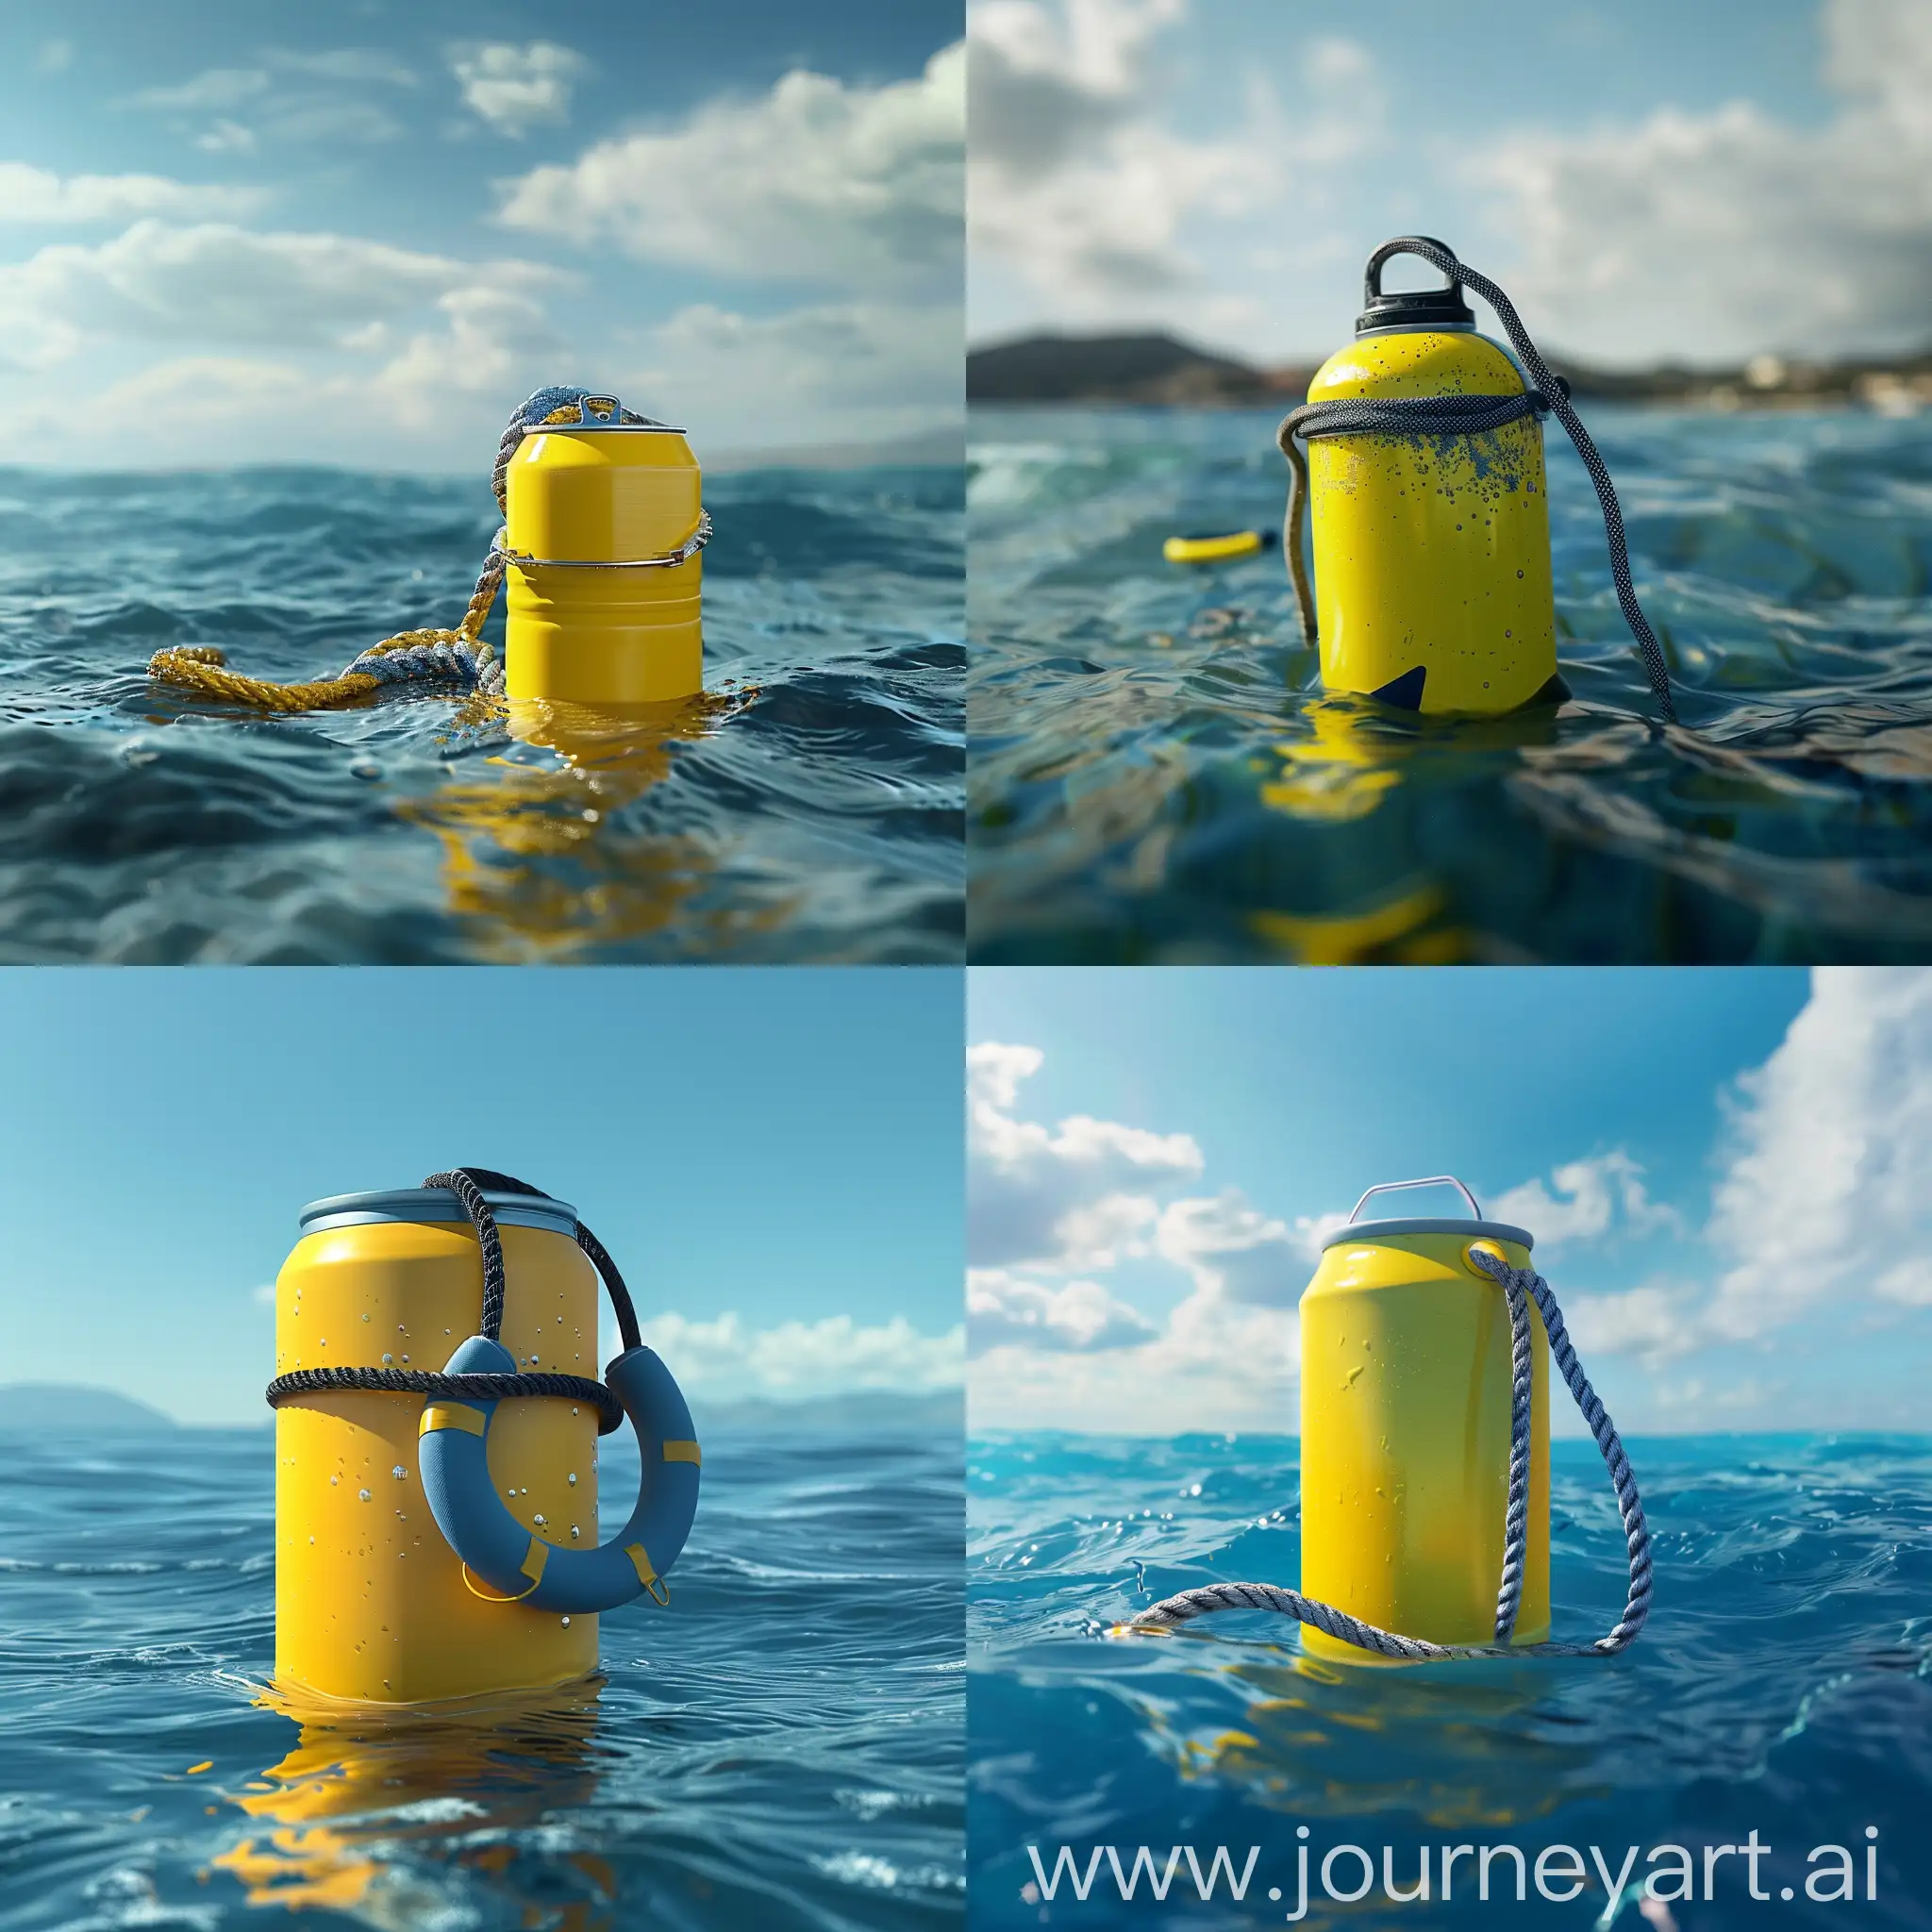 Emergency-Lifebuoy-Rescue-Can-in-Ocean-Waters